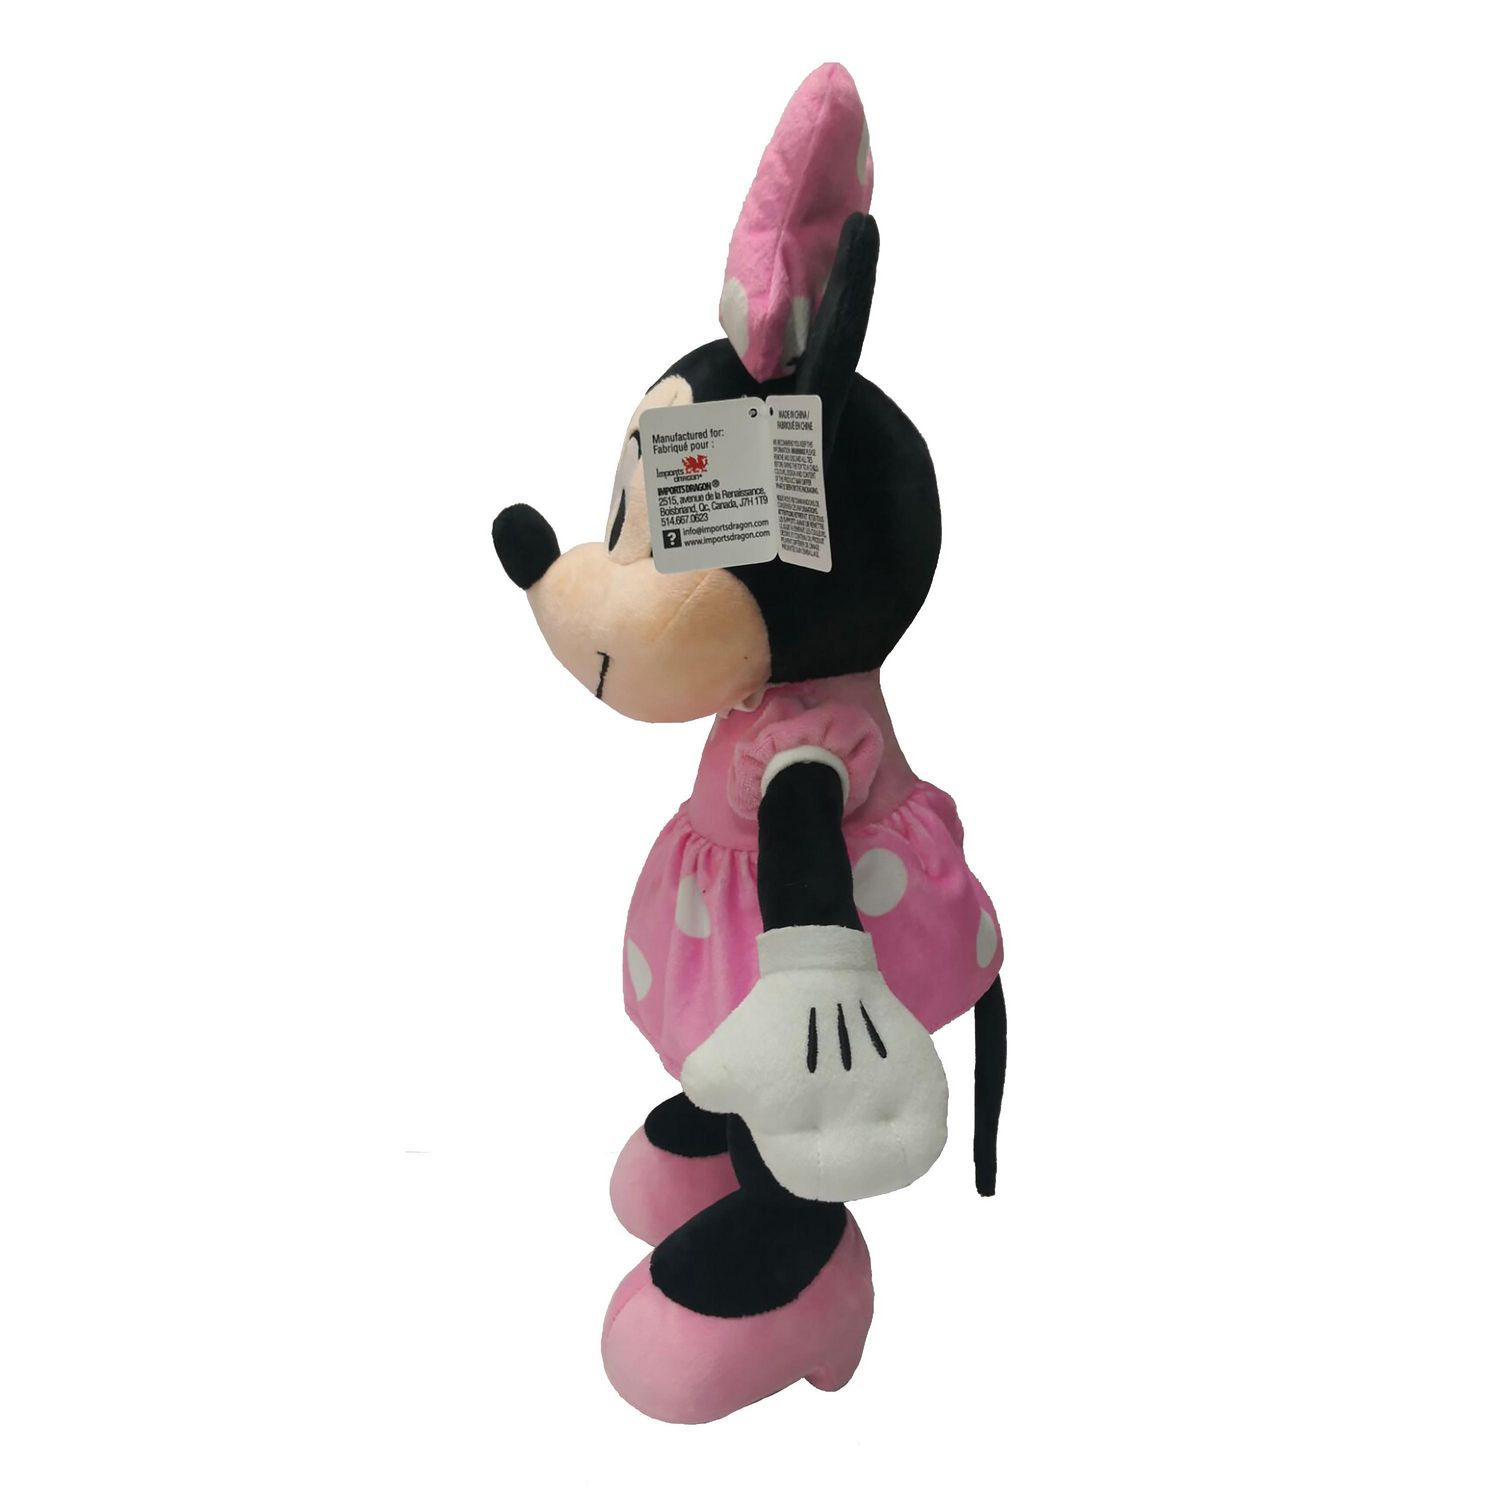 Disney Minnie Mouse plush purse at Mini's shop! Super adorable plush h... |  TikTok